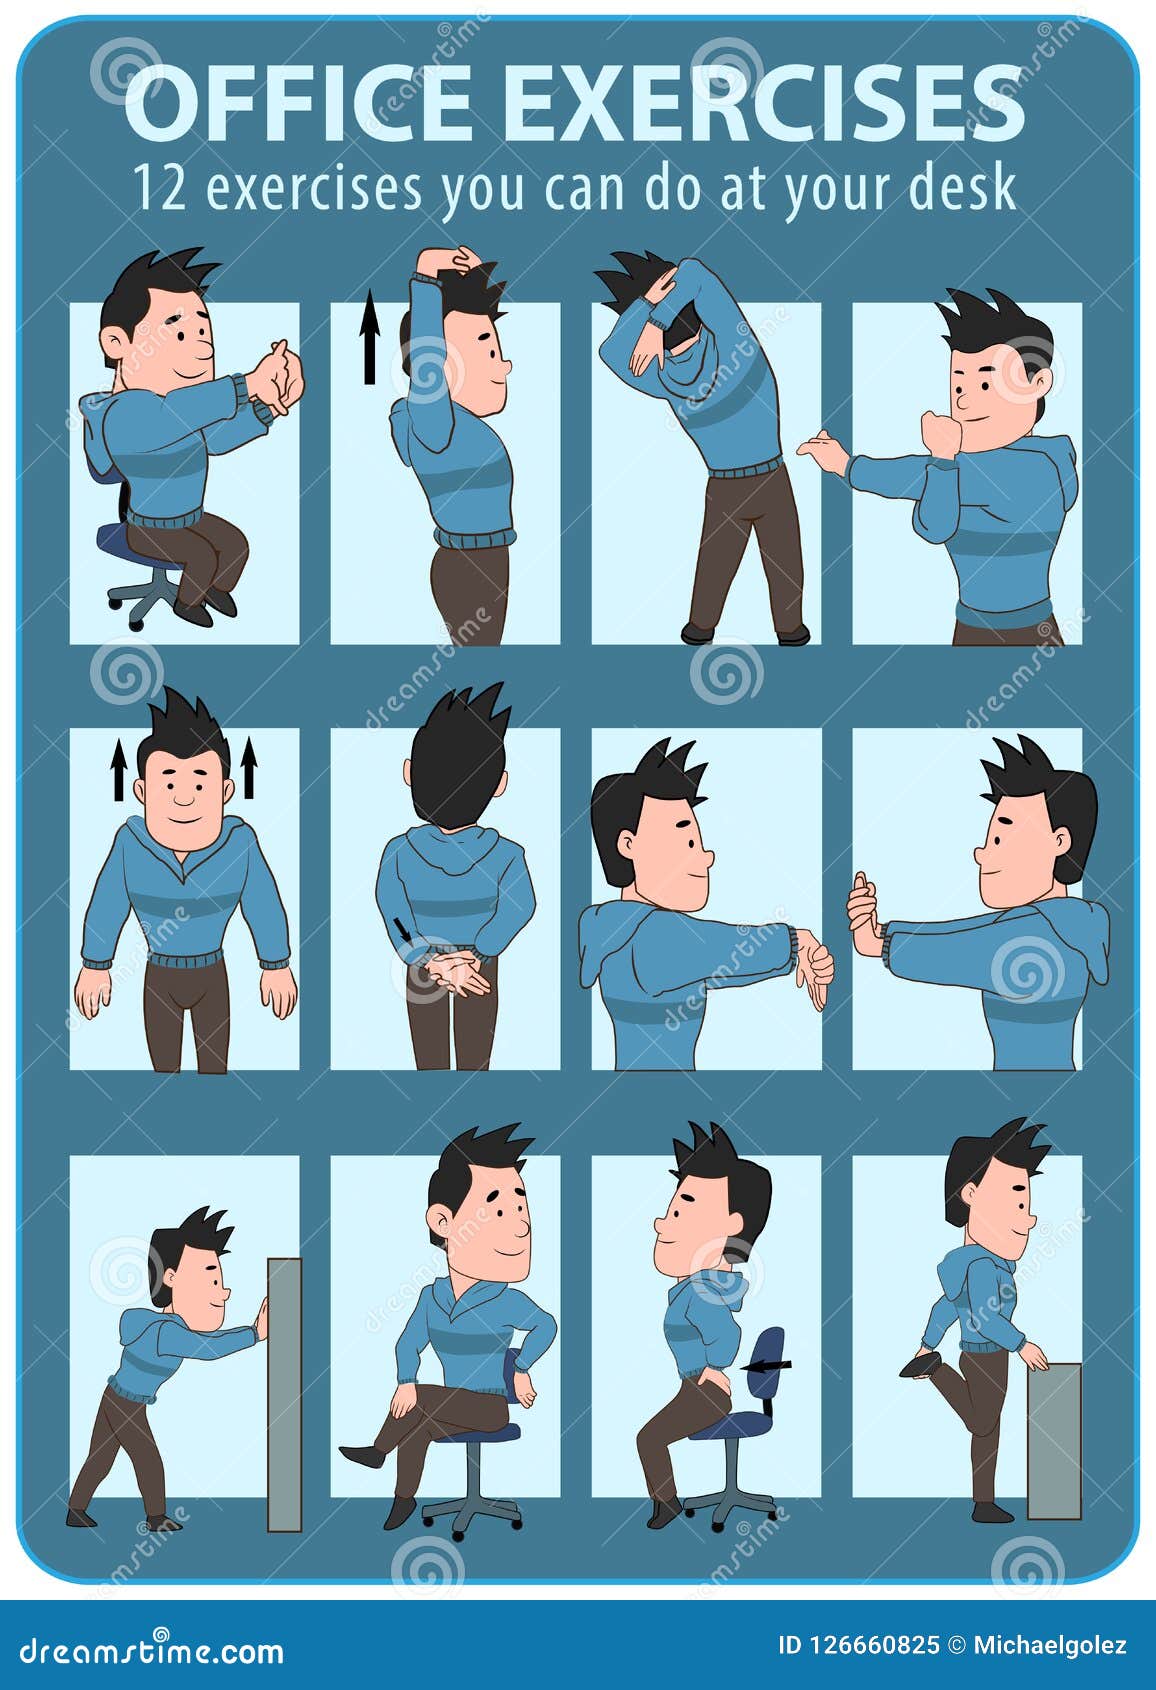 Office Exercises Demonstration Character Illustration Stock